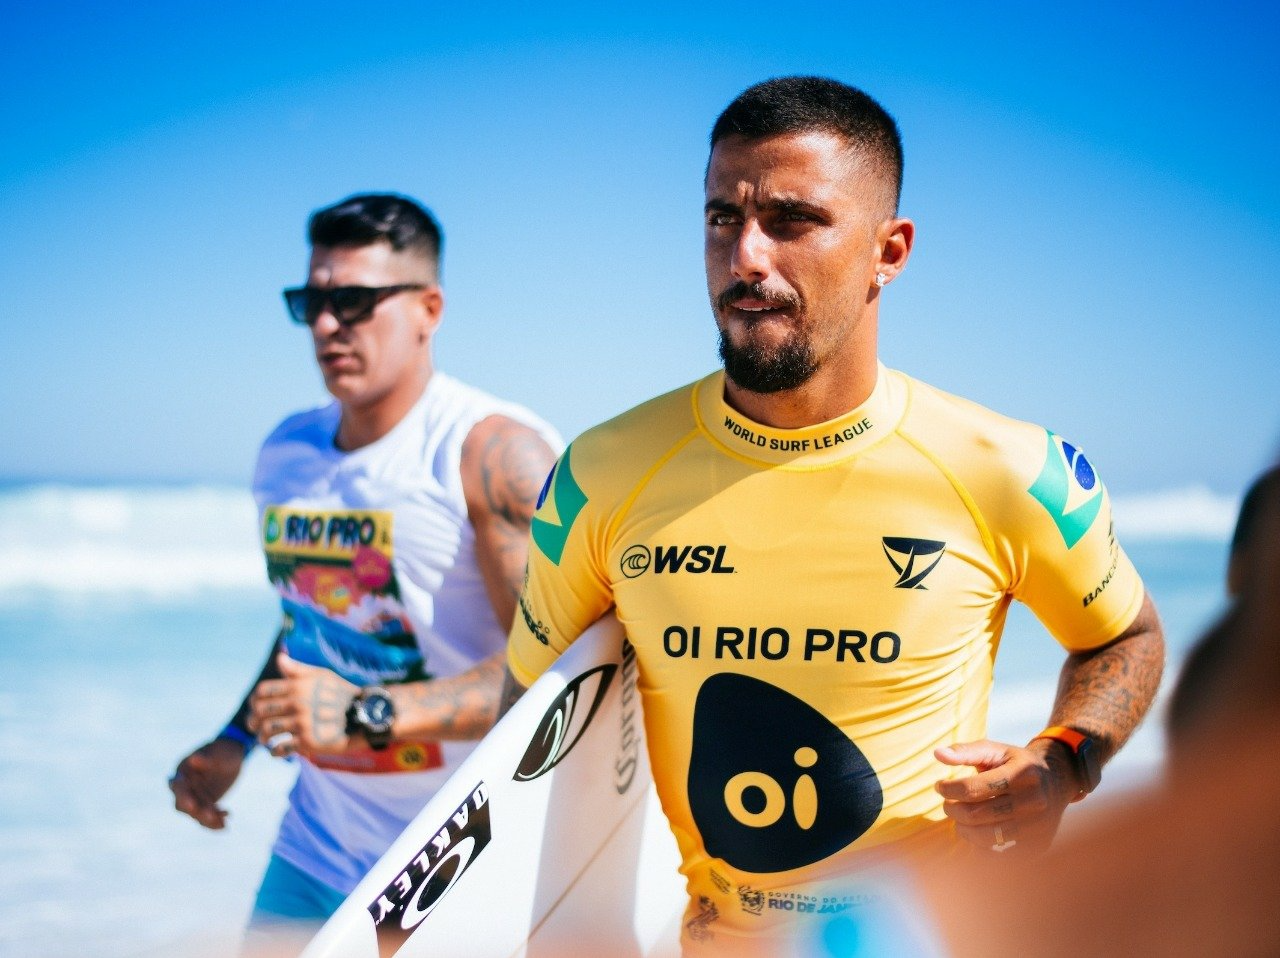 Filipe Toledo vence etapa de Saquarema do Circuito Mundial de Surfe